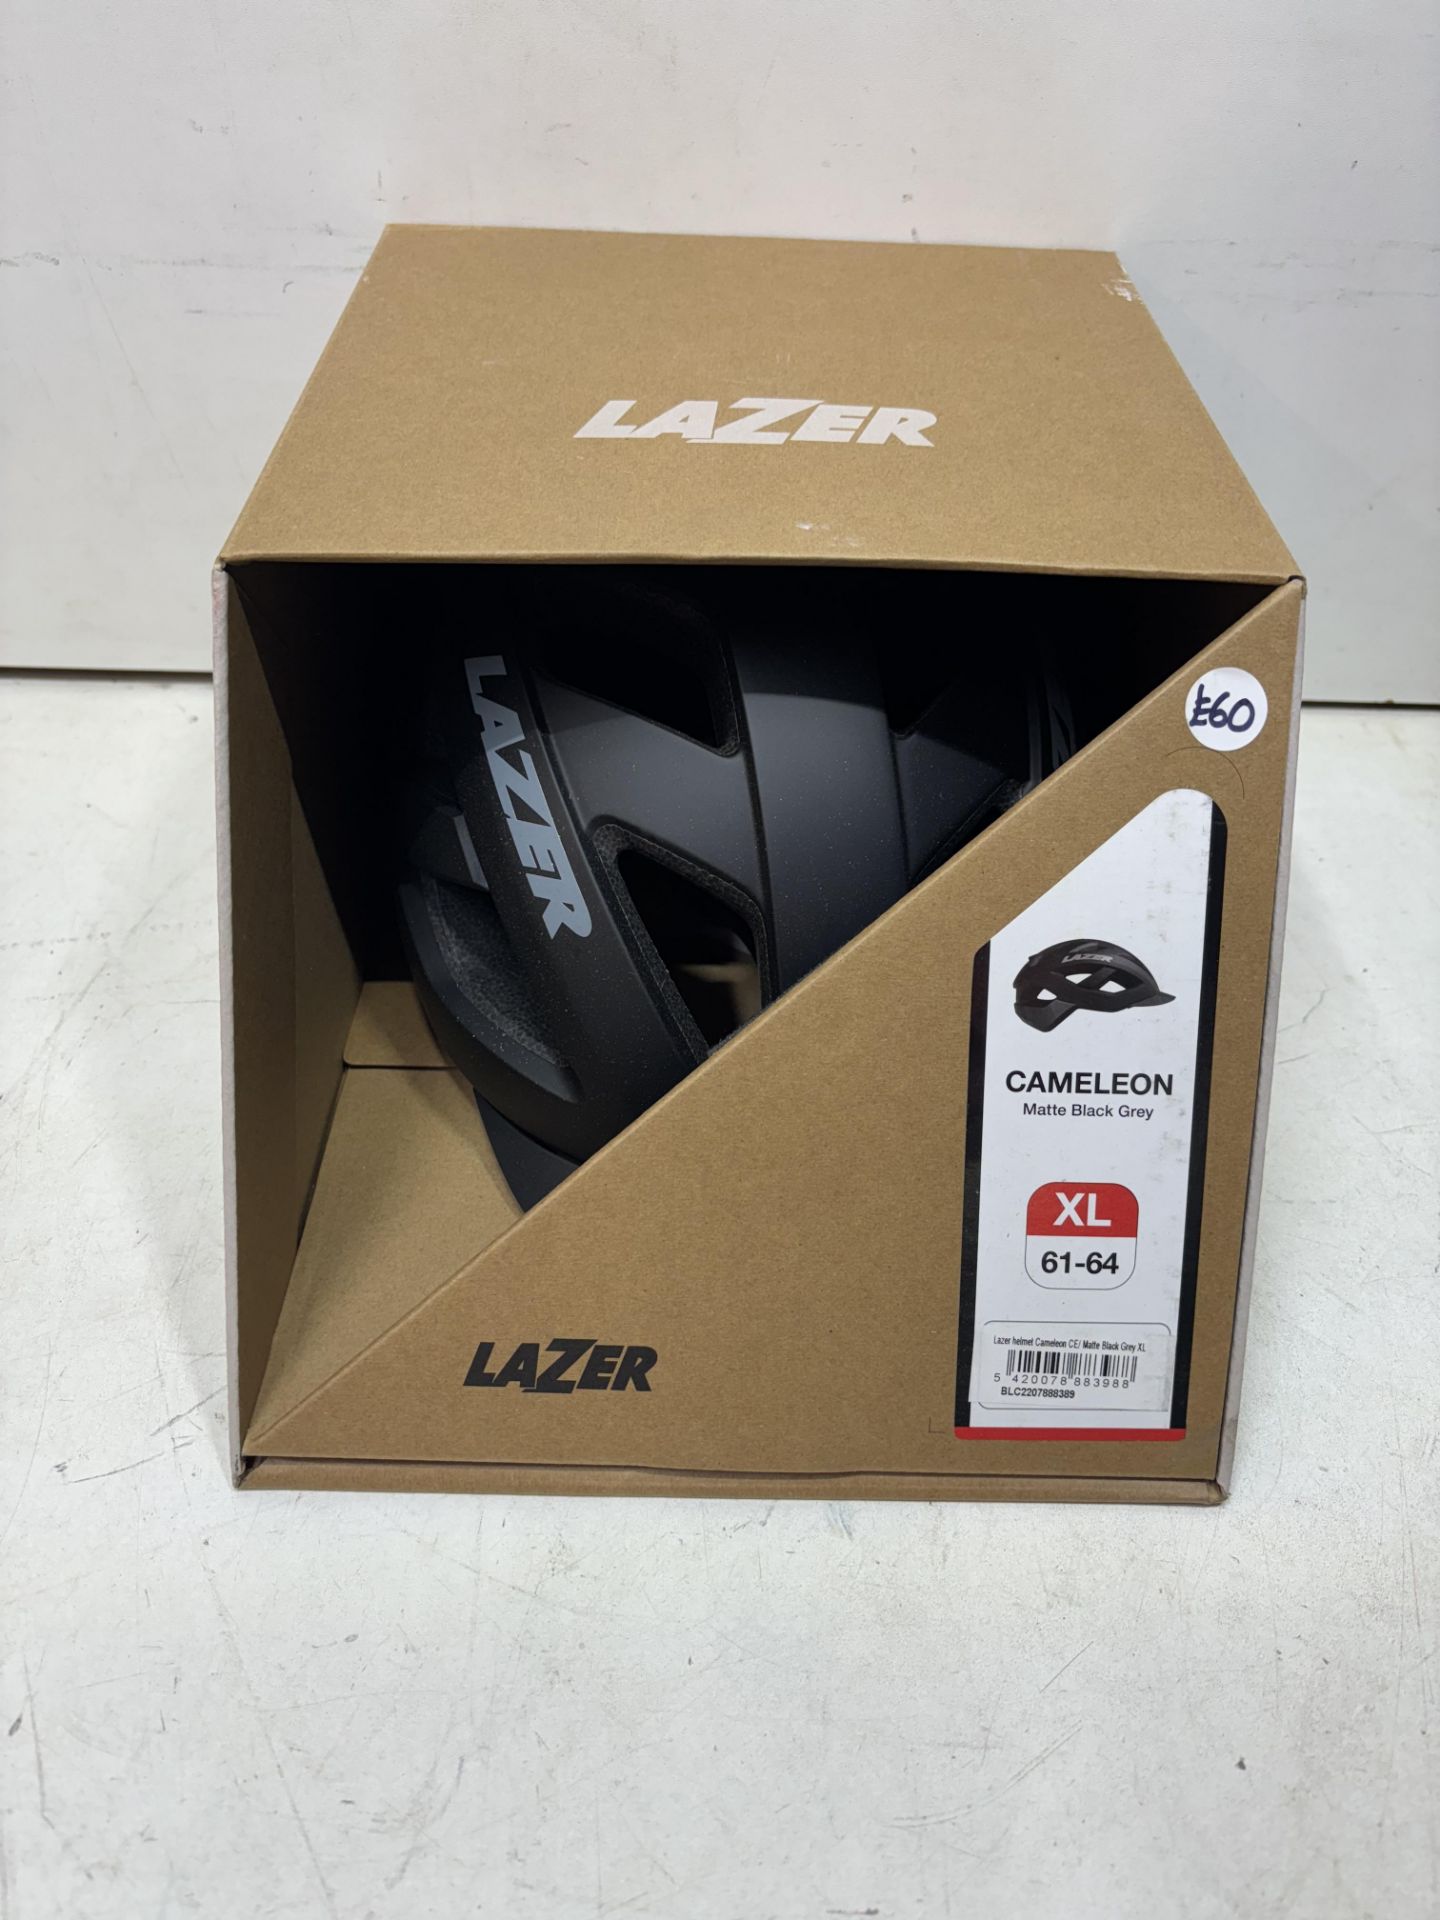 LAZER Cameleon Helmet, Size XL (61-64cm) - Matte Black/Grey - Image 2 of 3